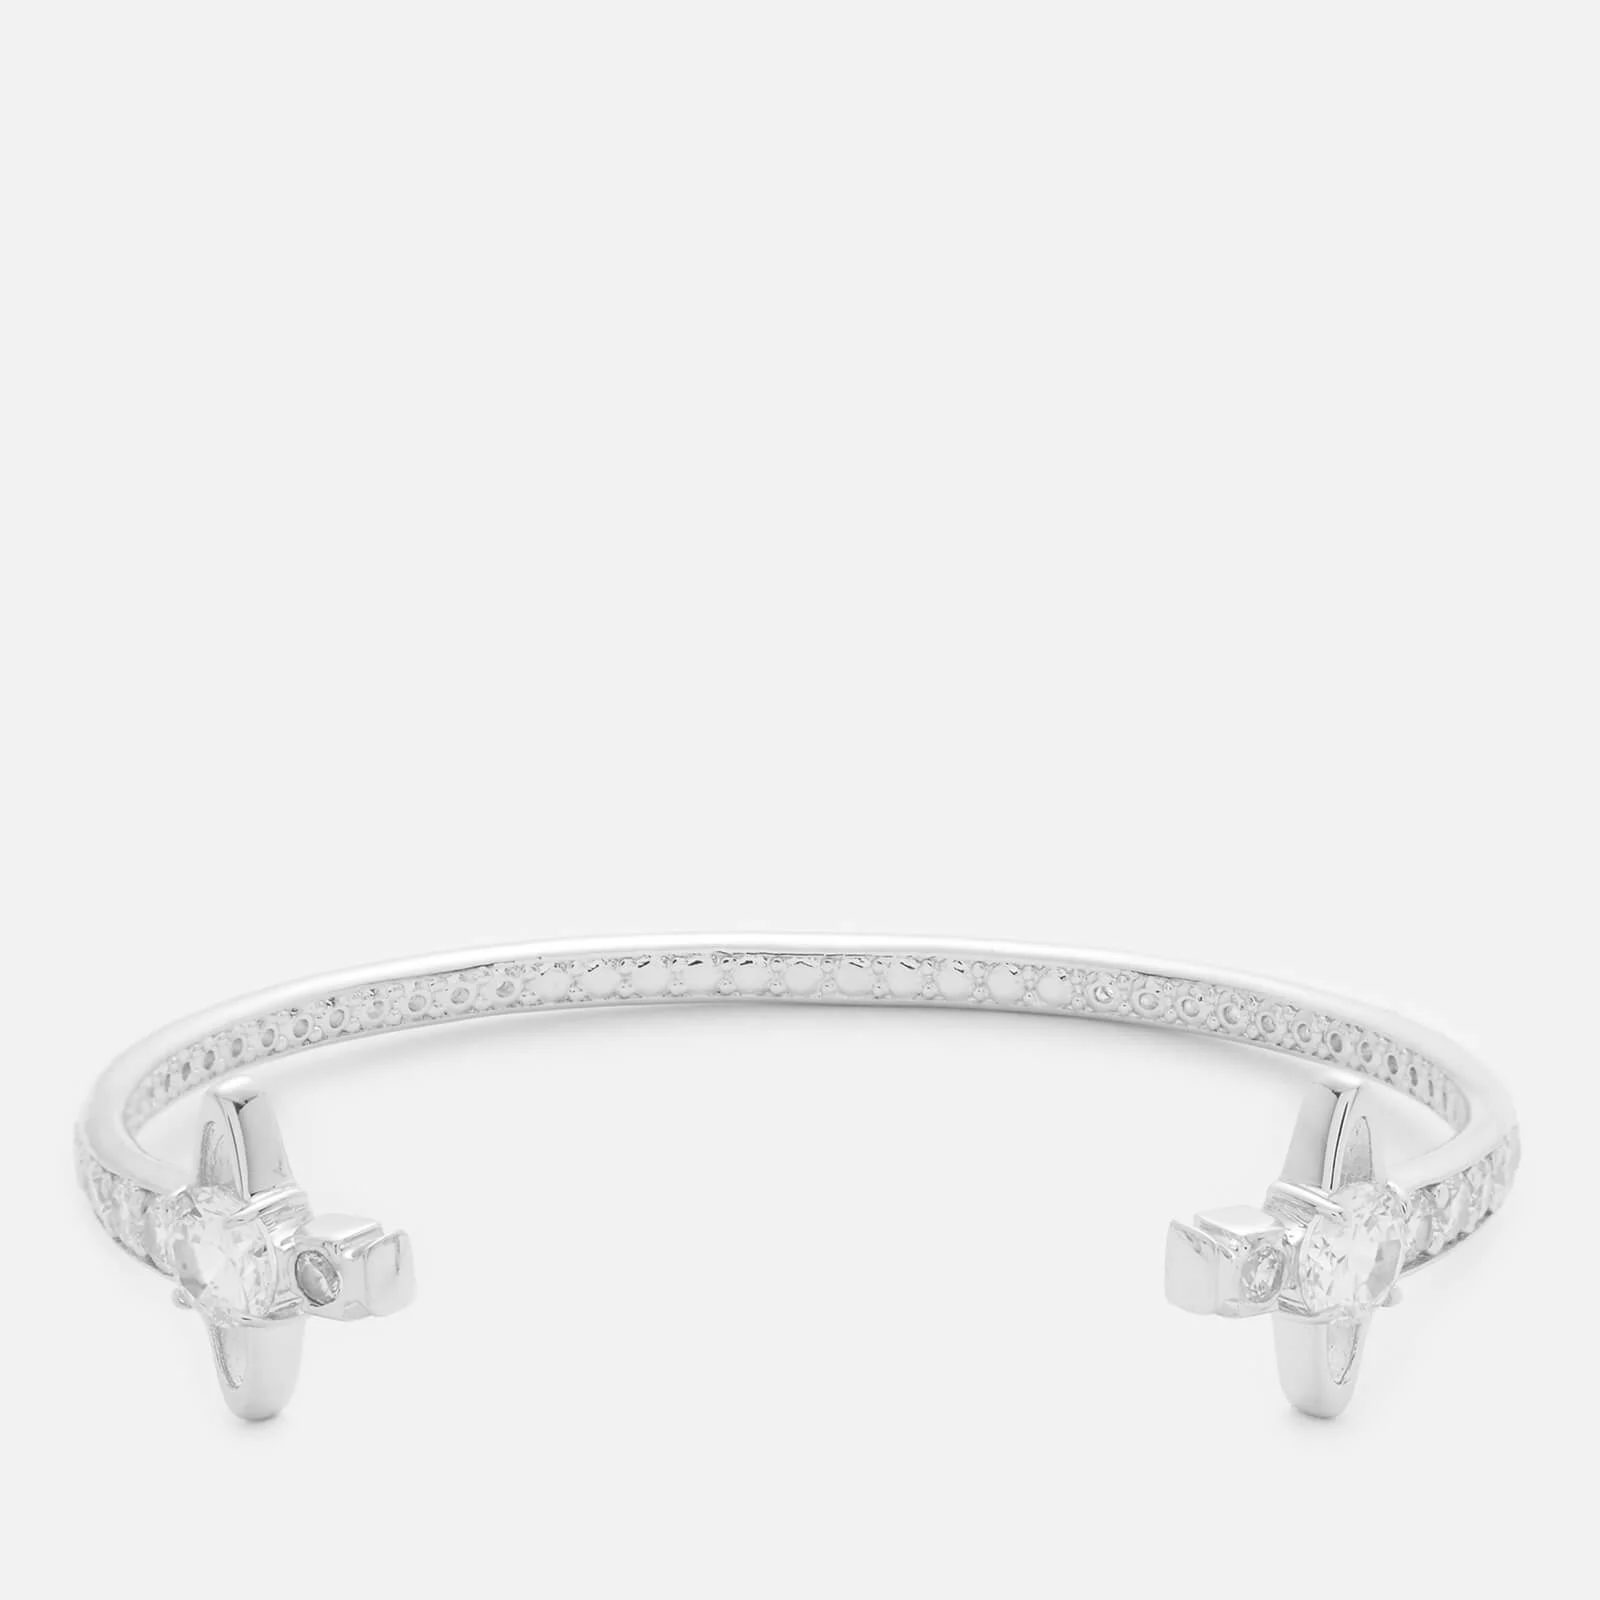 Vivienne Westwood Women's Reina Bracelet - White Cubic Zirconia Image 1